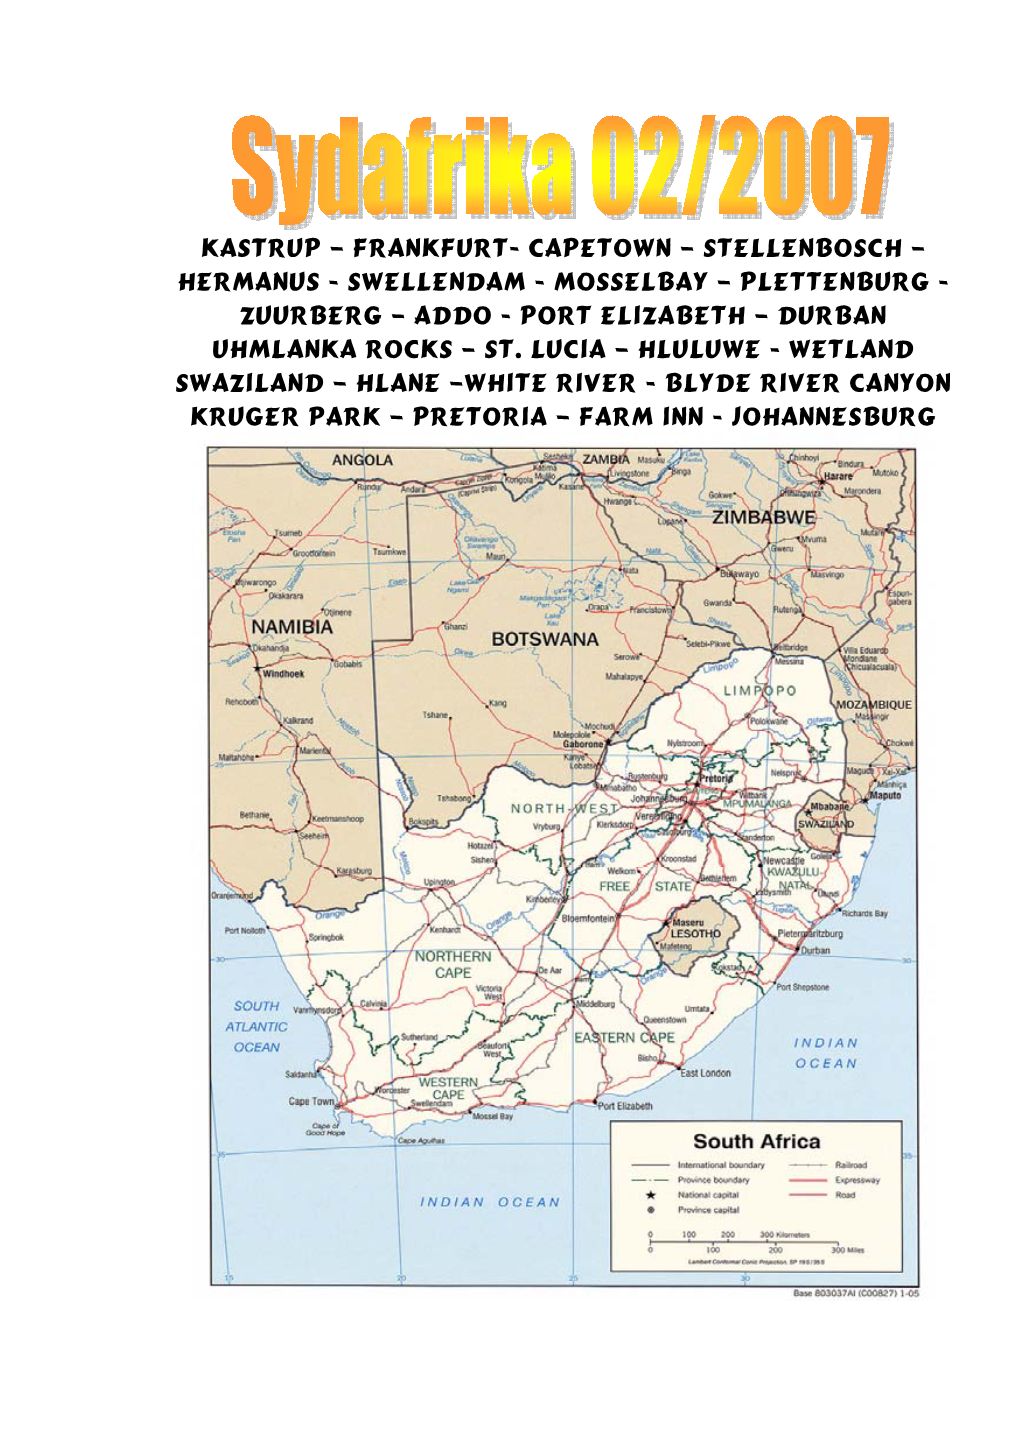 Kastrup – Frankfurt- Capetown – Stellenbosch – Hermanus - Swellendam - Mosselbay – Plettenburg - Zuurberg – Addo - Port Elizabeth – Durban Uhmlanka Rocks – St